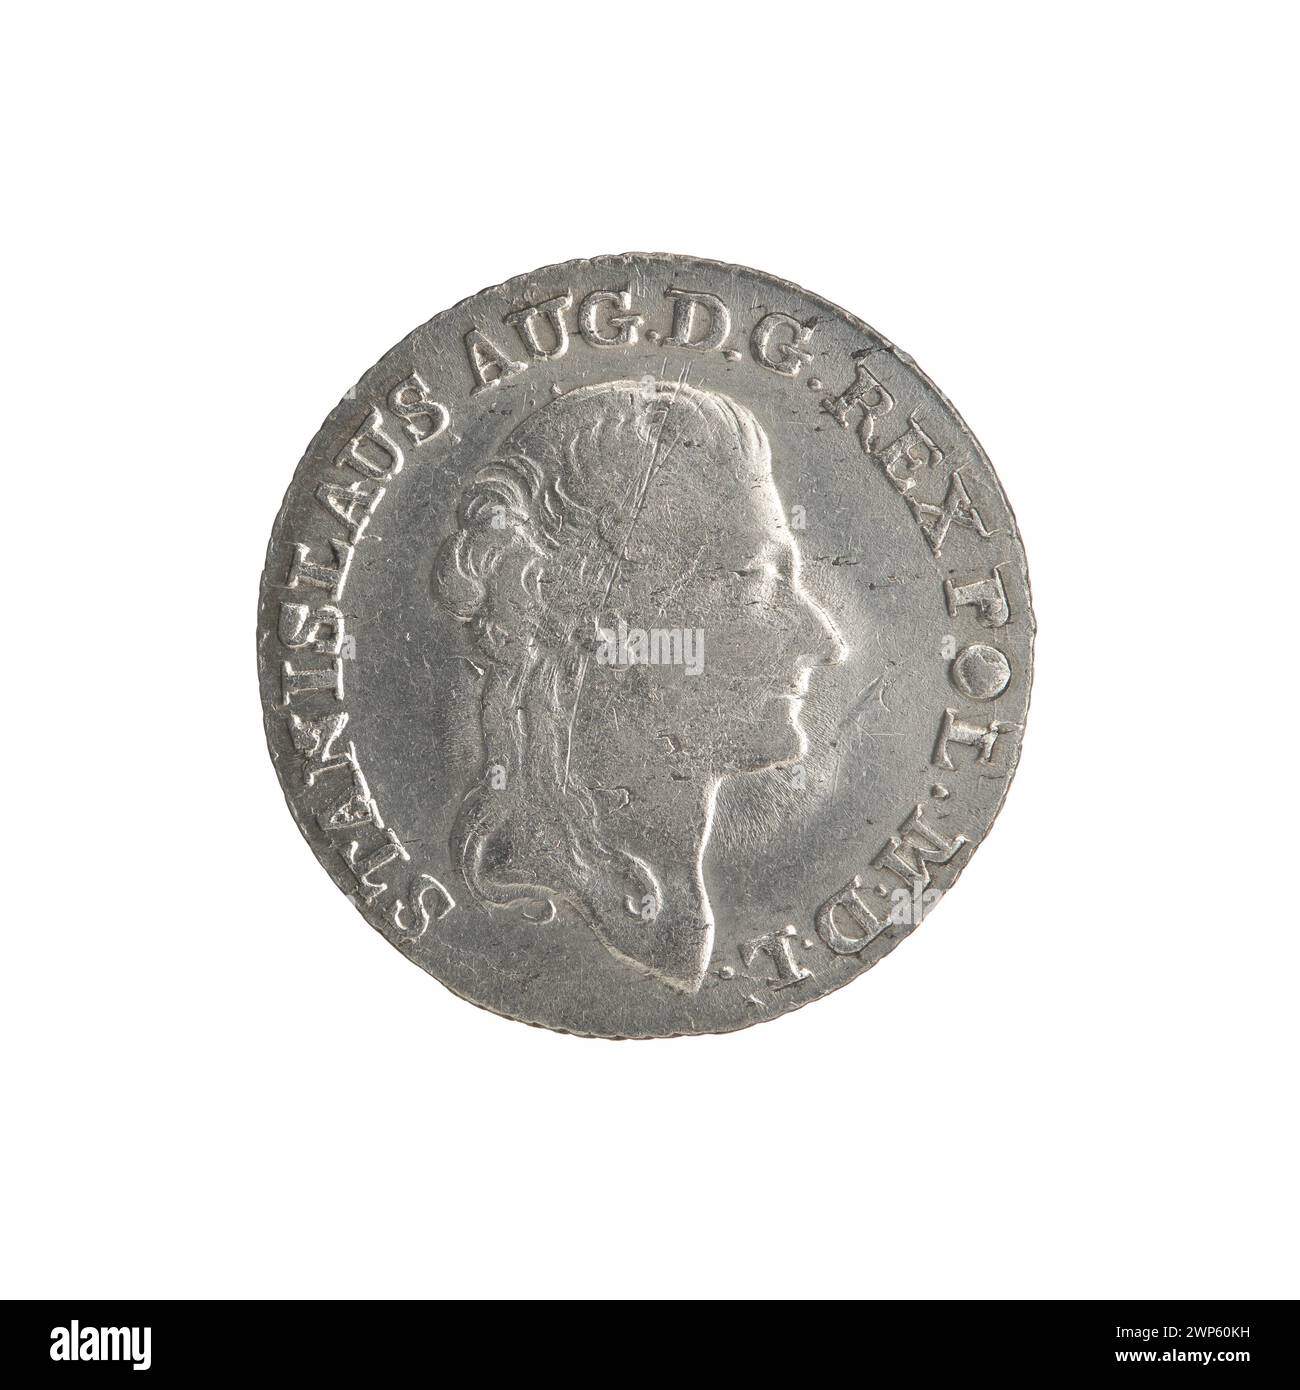 crowning; Stanis Aw August Poniatowski (Polish King; 1764-1795), Brenn, Efraim (Fl. 1774-1792); 1791 (1791-00-00-1791-00-00); Stock Photo